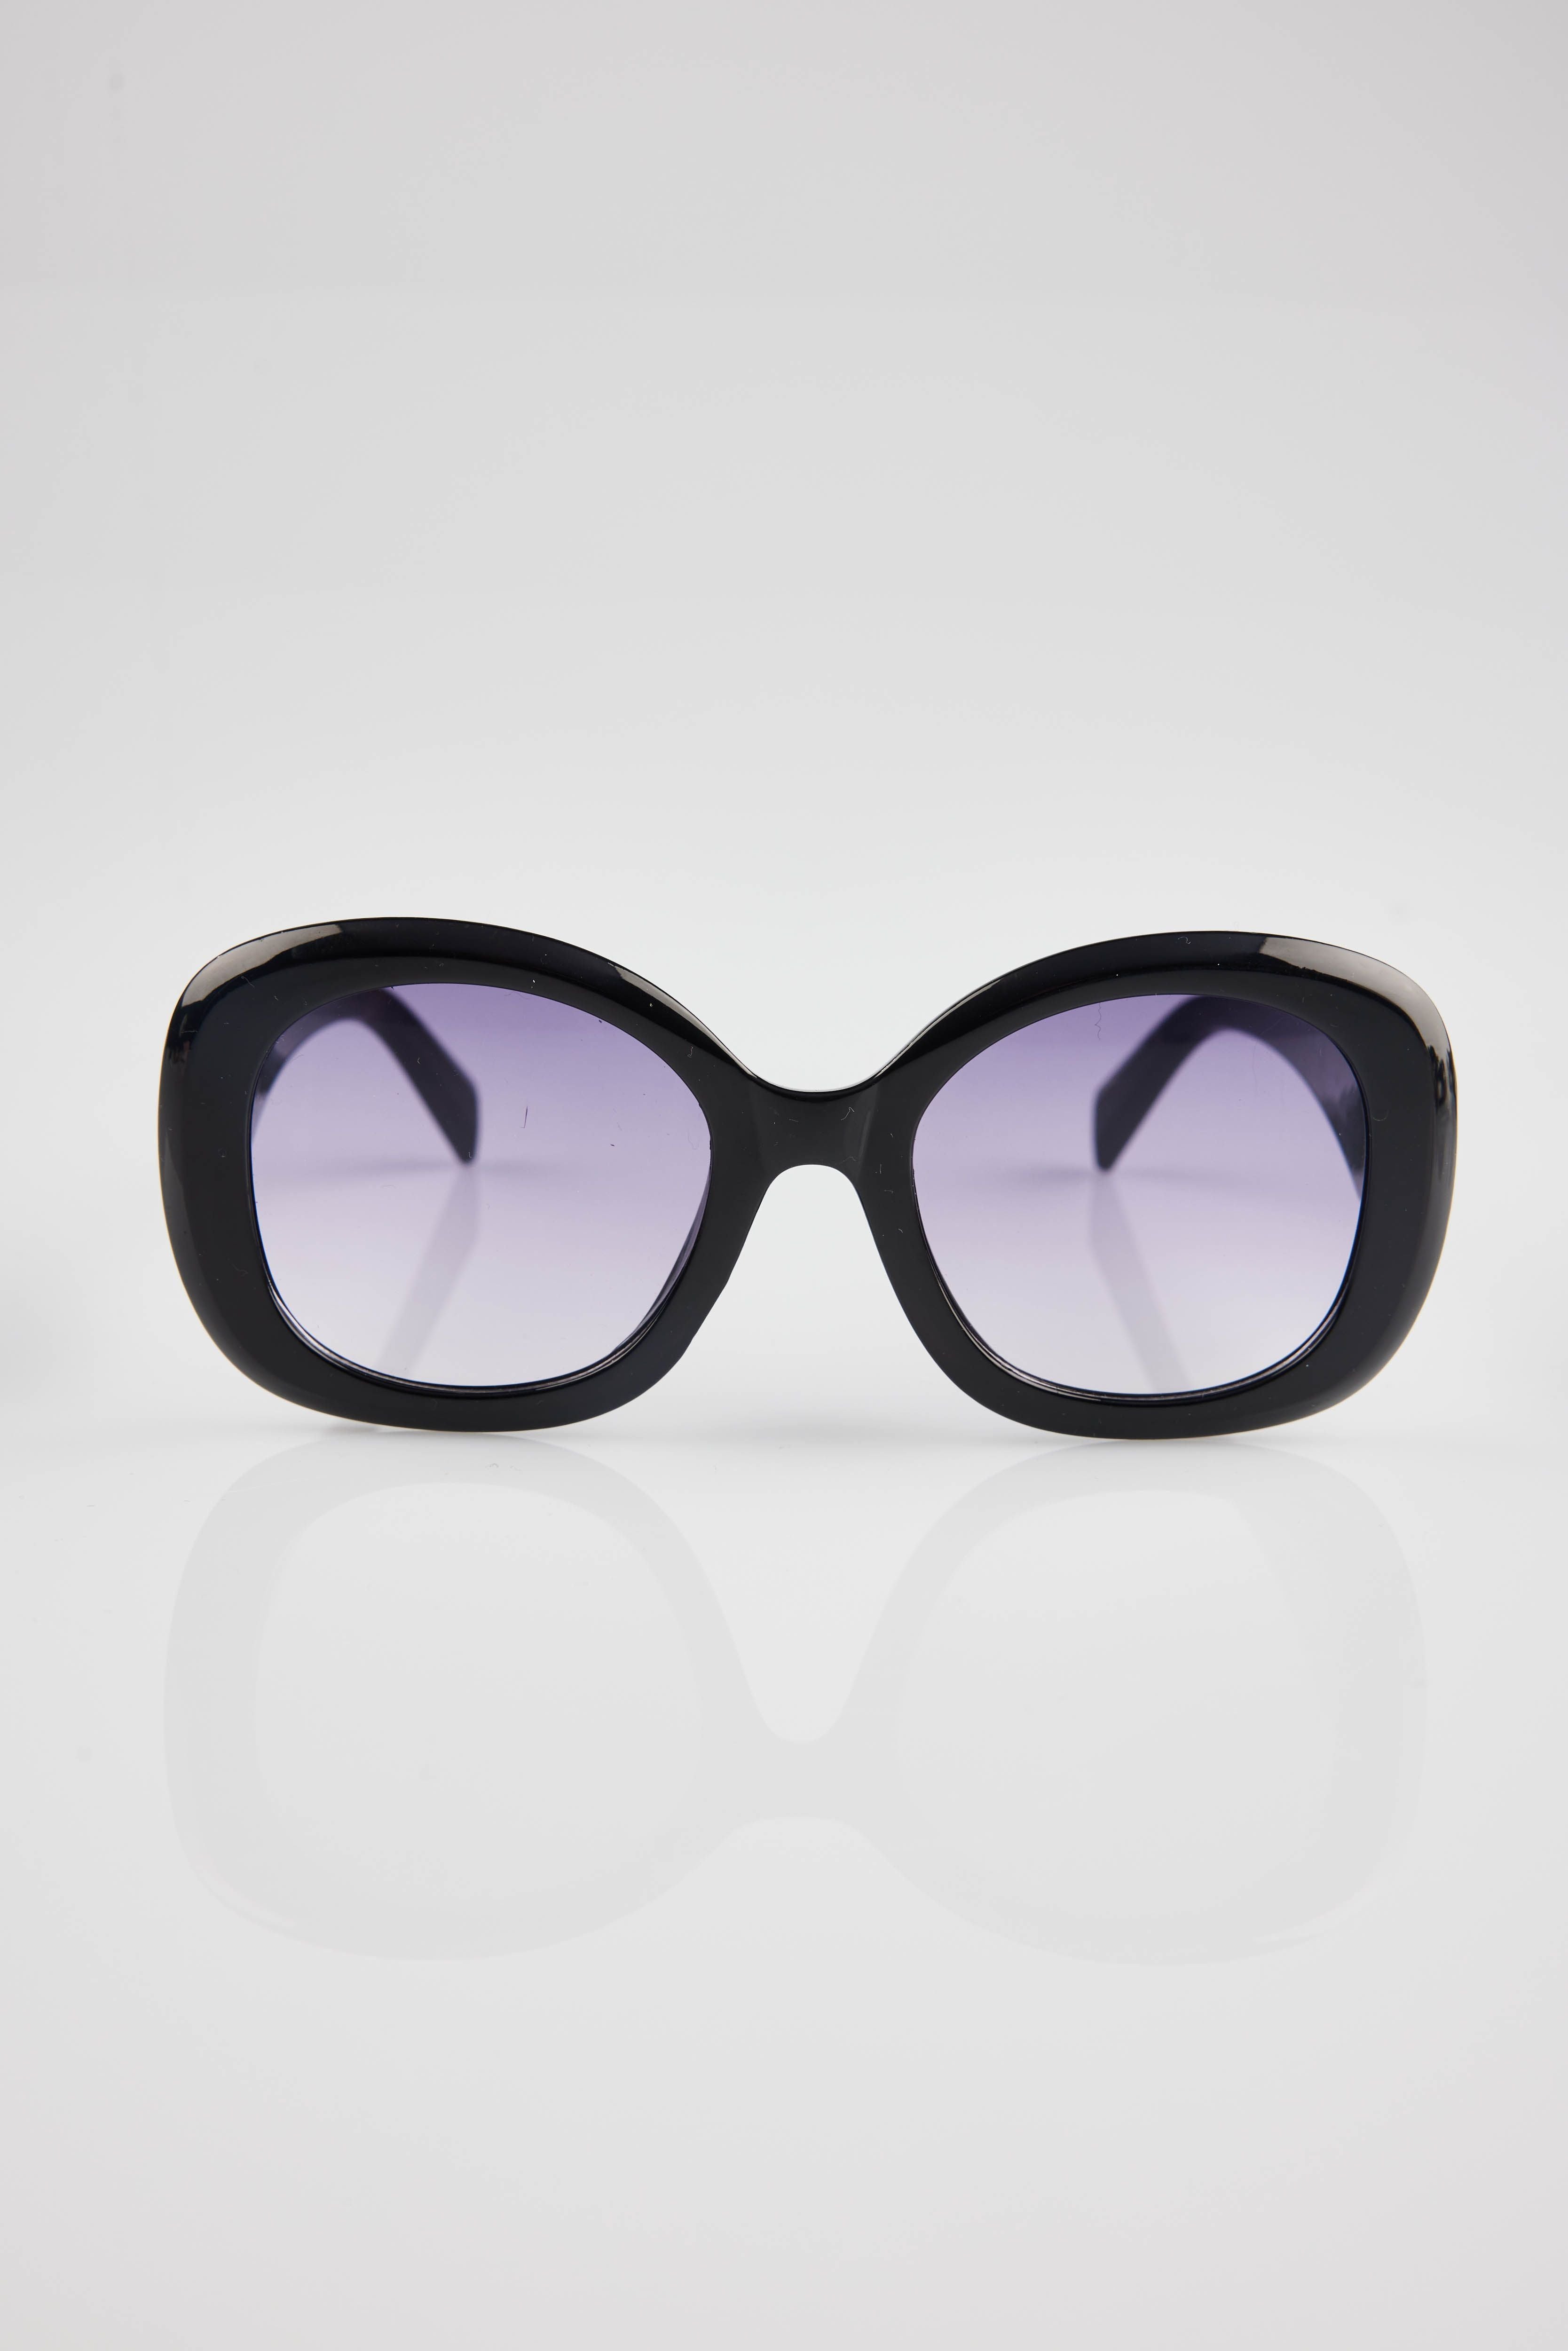 Zhivago Sunglasses - Black-Headwear & Sunglasses-Holiday-The Bay Room